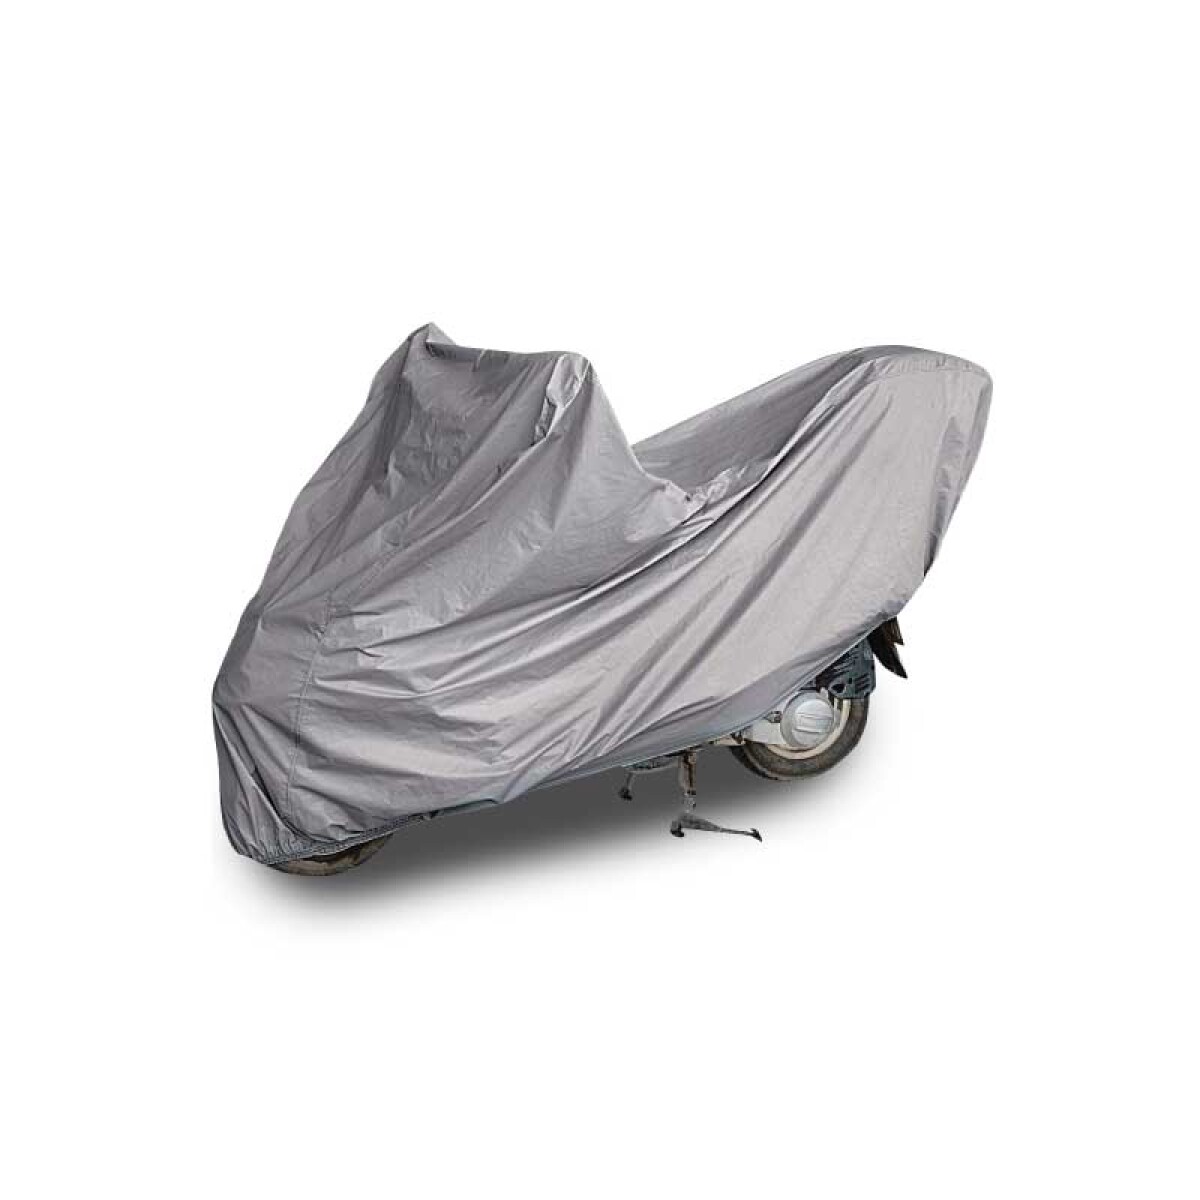 Cobertor Para Moto Talle Xl 